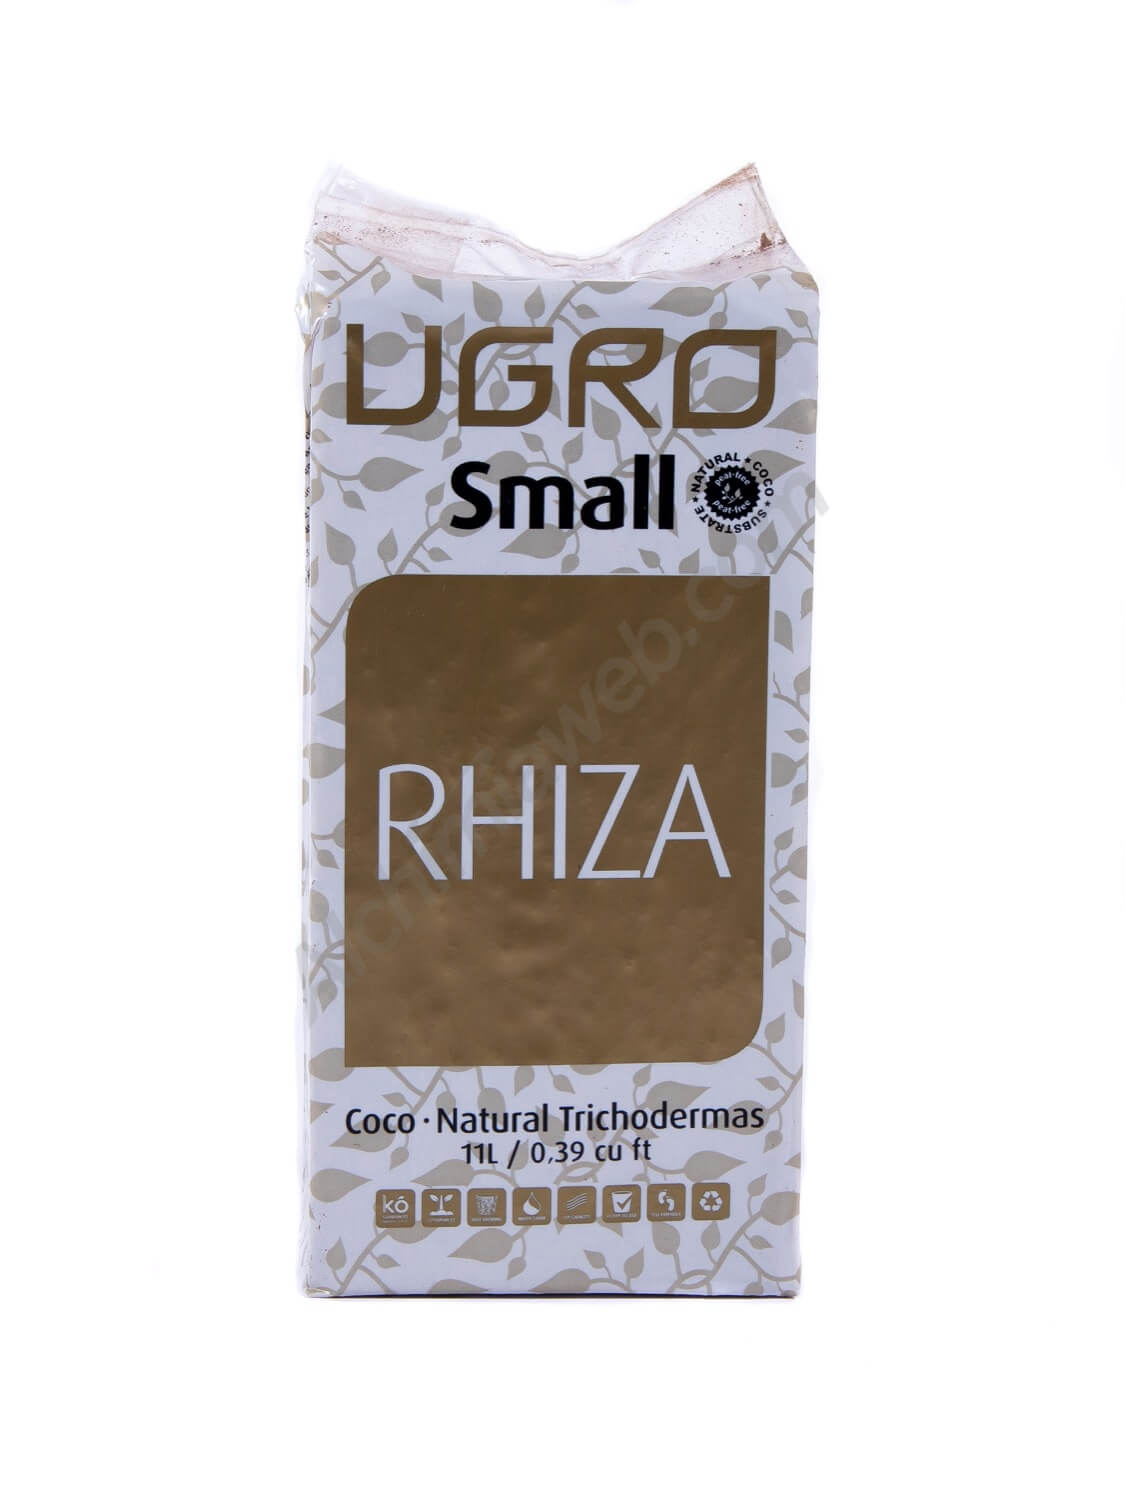 UGro Small Rhiza. Coco premsat amb micorrizes